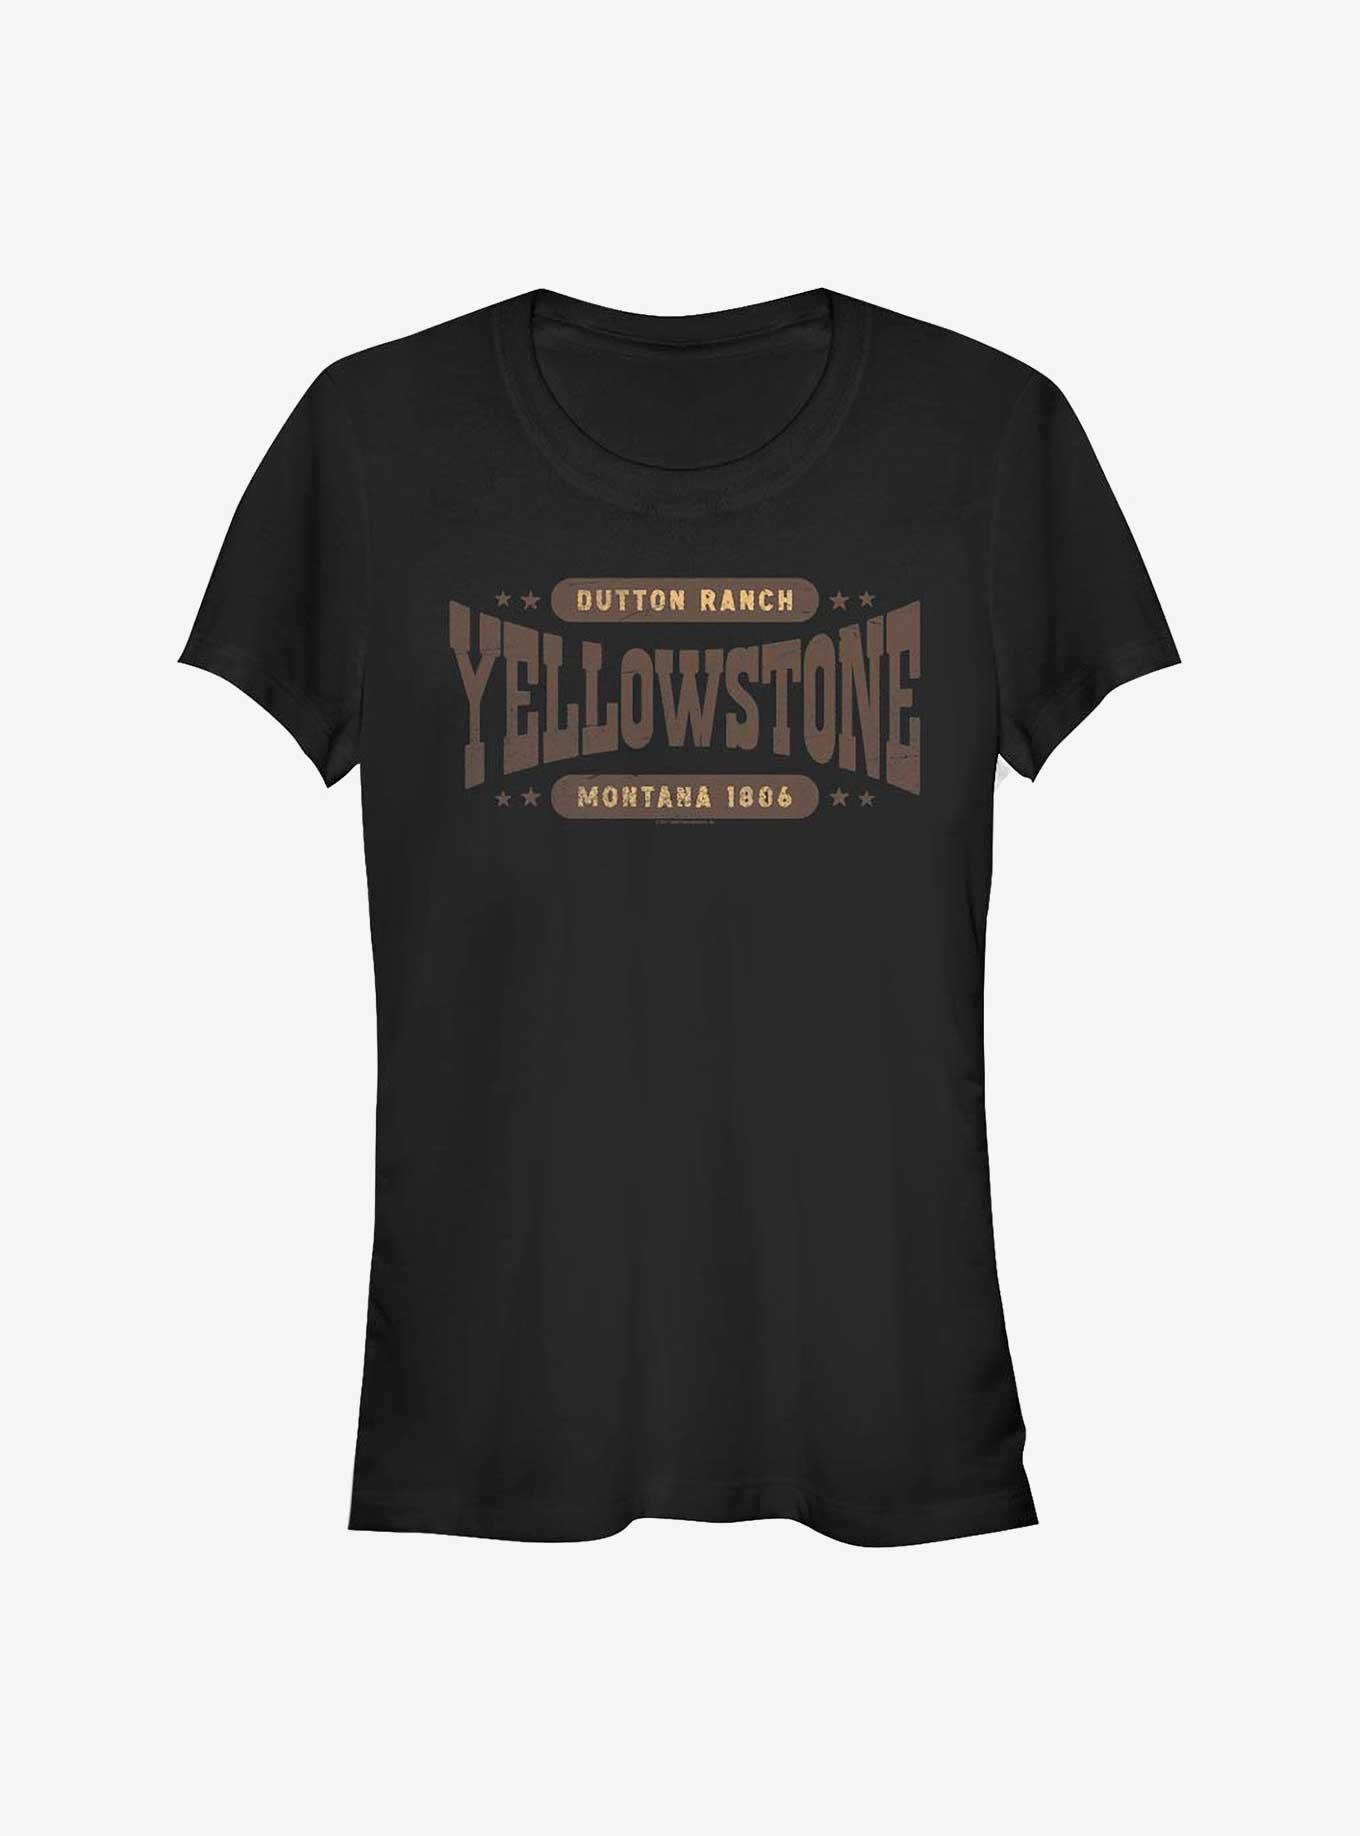 Yellowstone Dutton Ranch Montana Girls T-Shirt, BLACK, hi-res